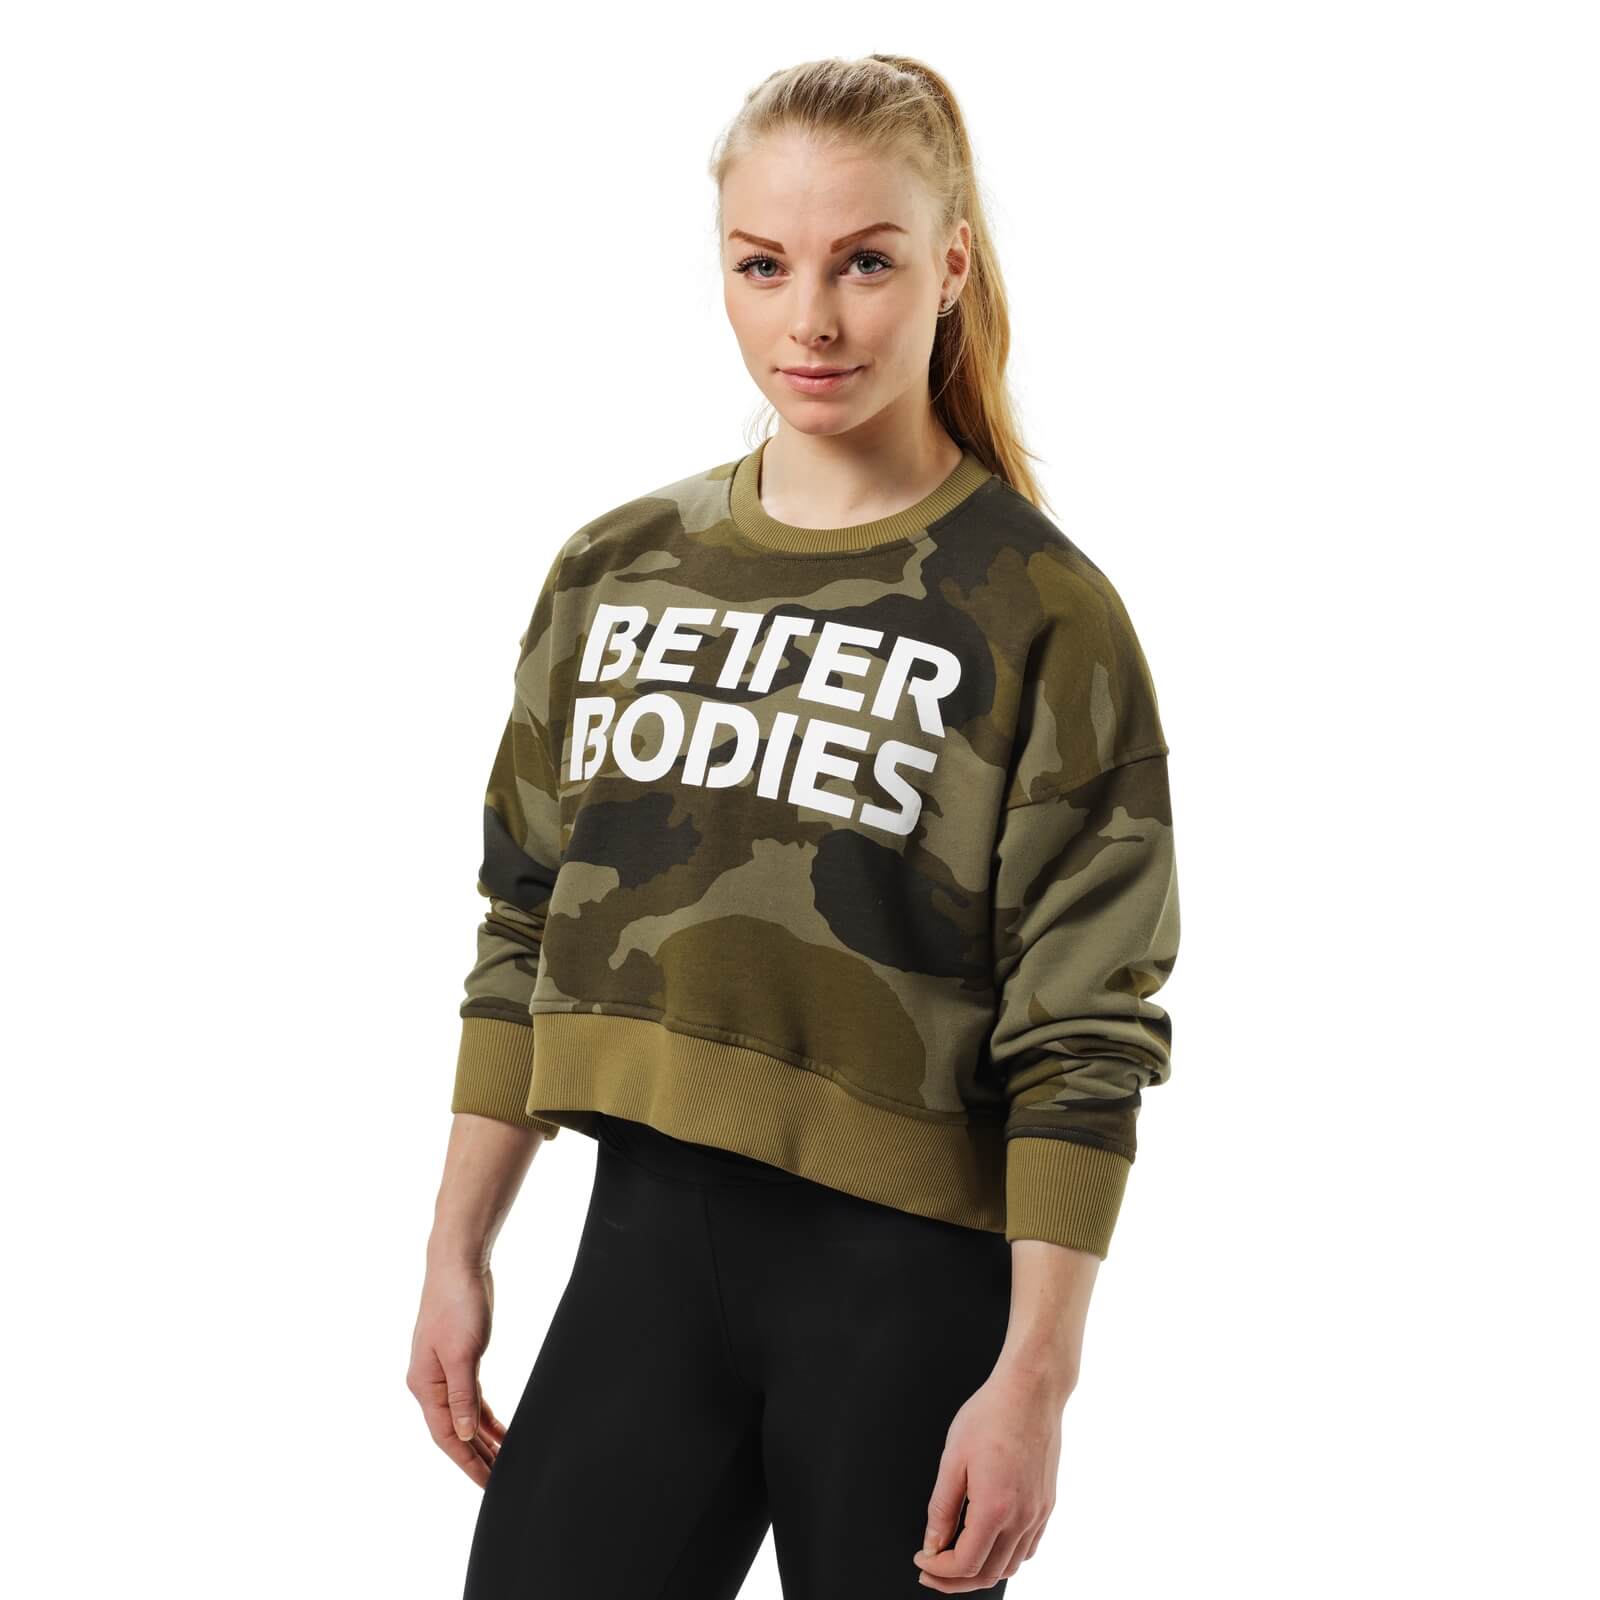 Sjekke Chelsea Sweater, dark green camo, Better Bodies hos SportGymButikken.no